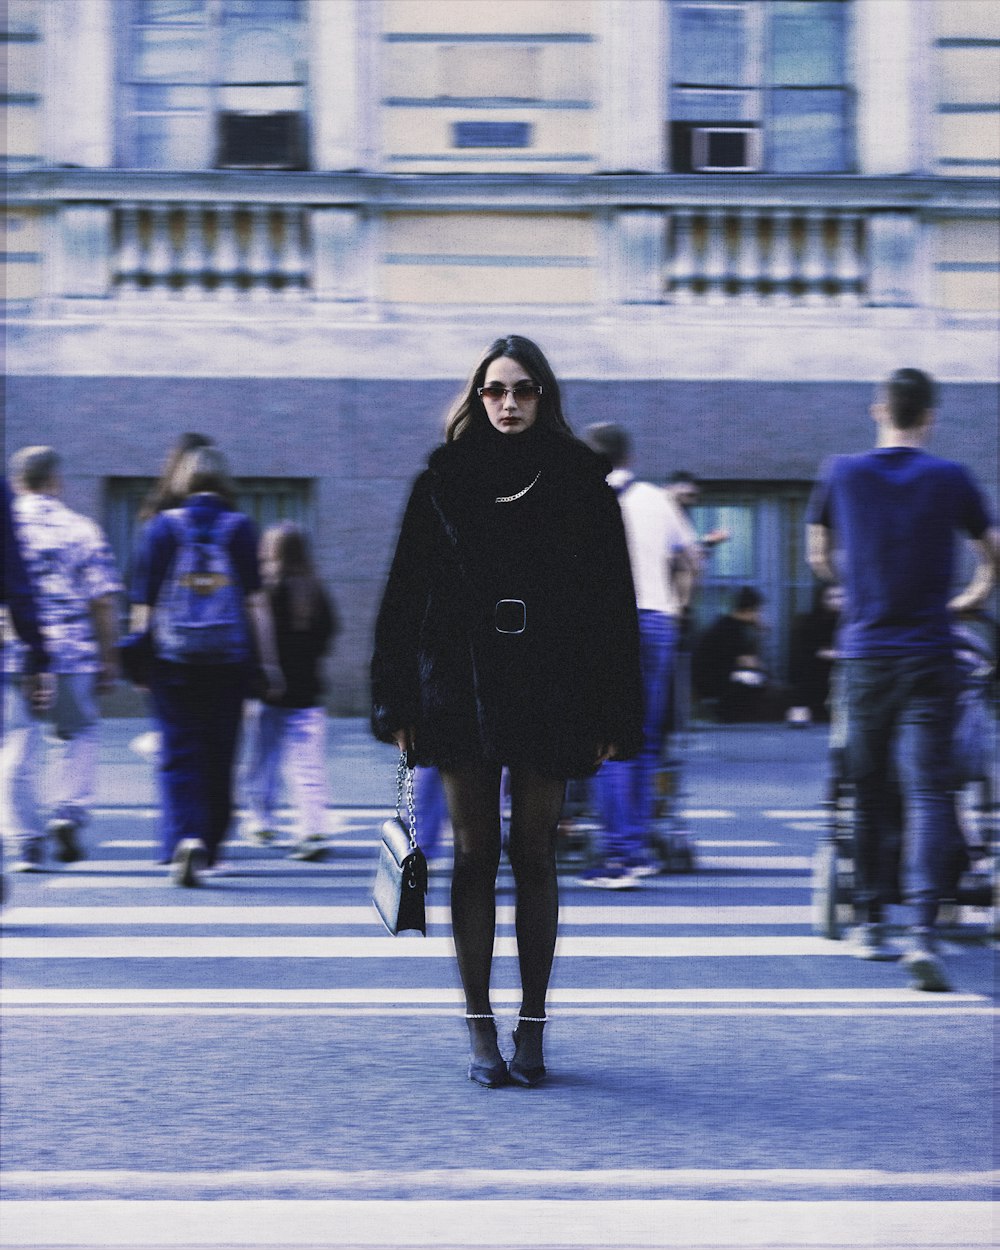 a woman in a black coat is walking down the street